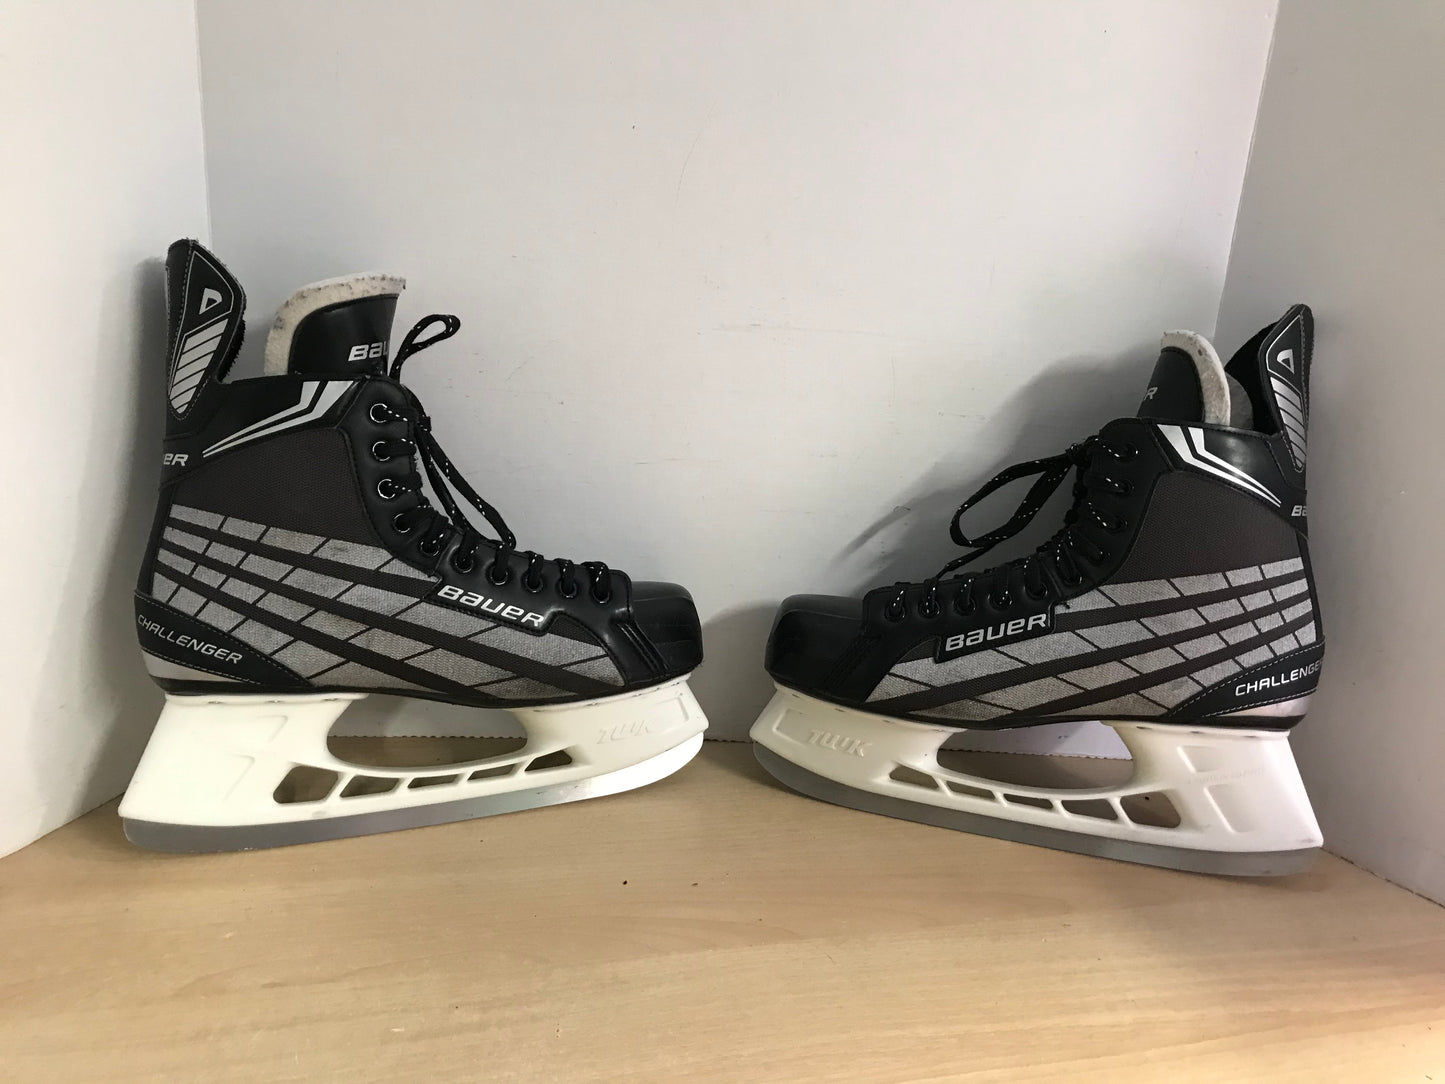 Hockey Skates Men's Size 13.5 Shoe Size Bauer Challenger Excellent